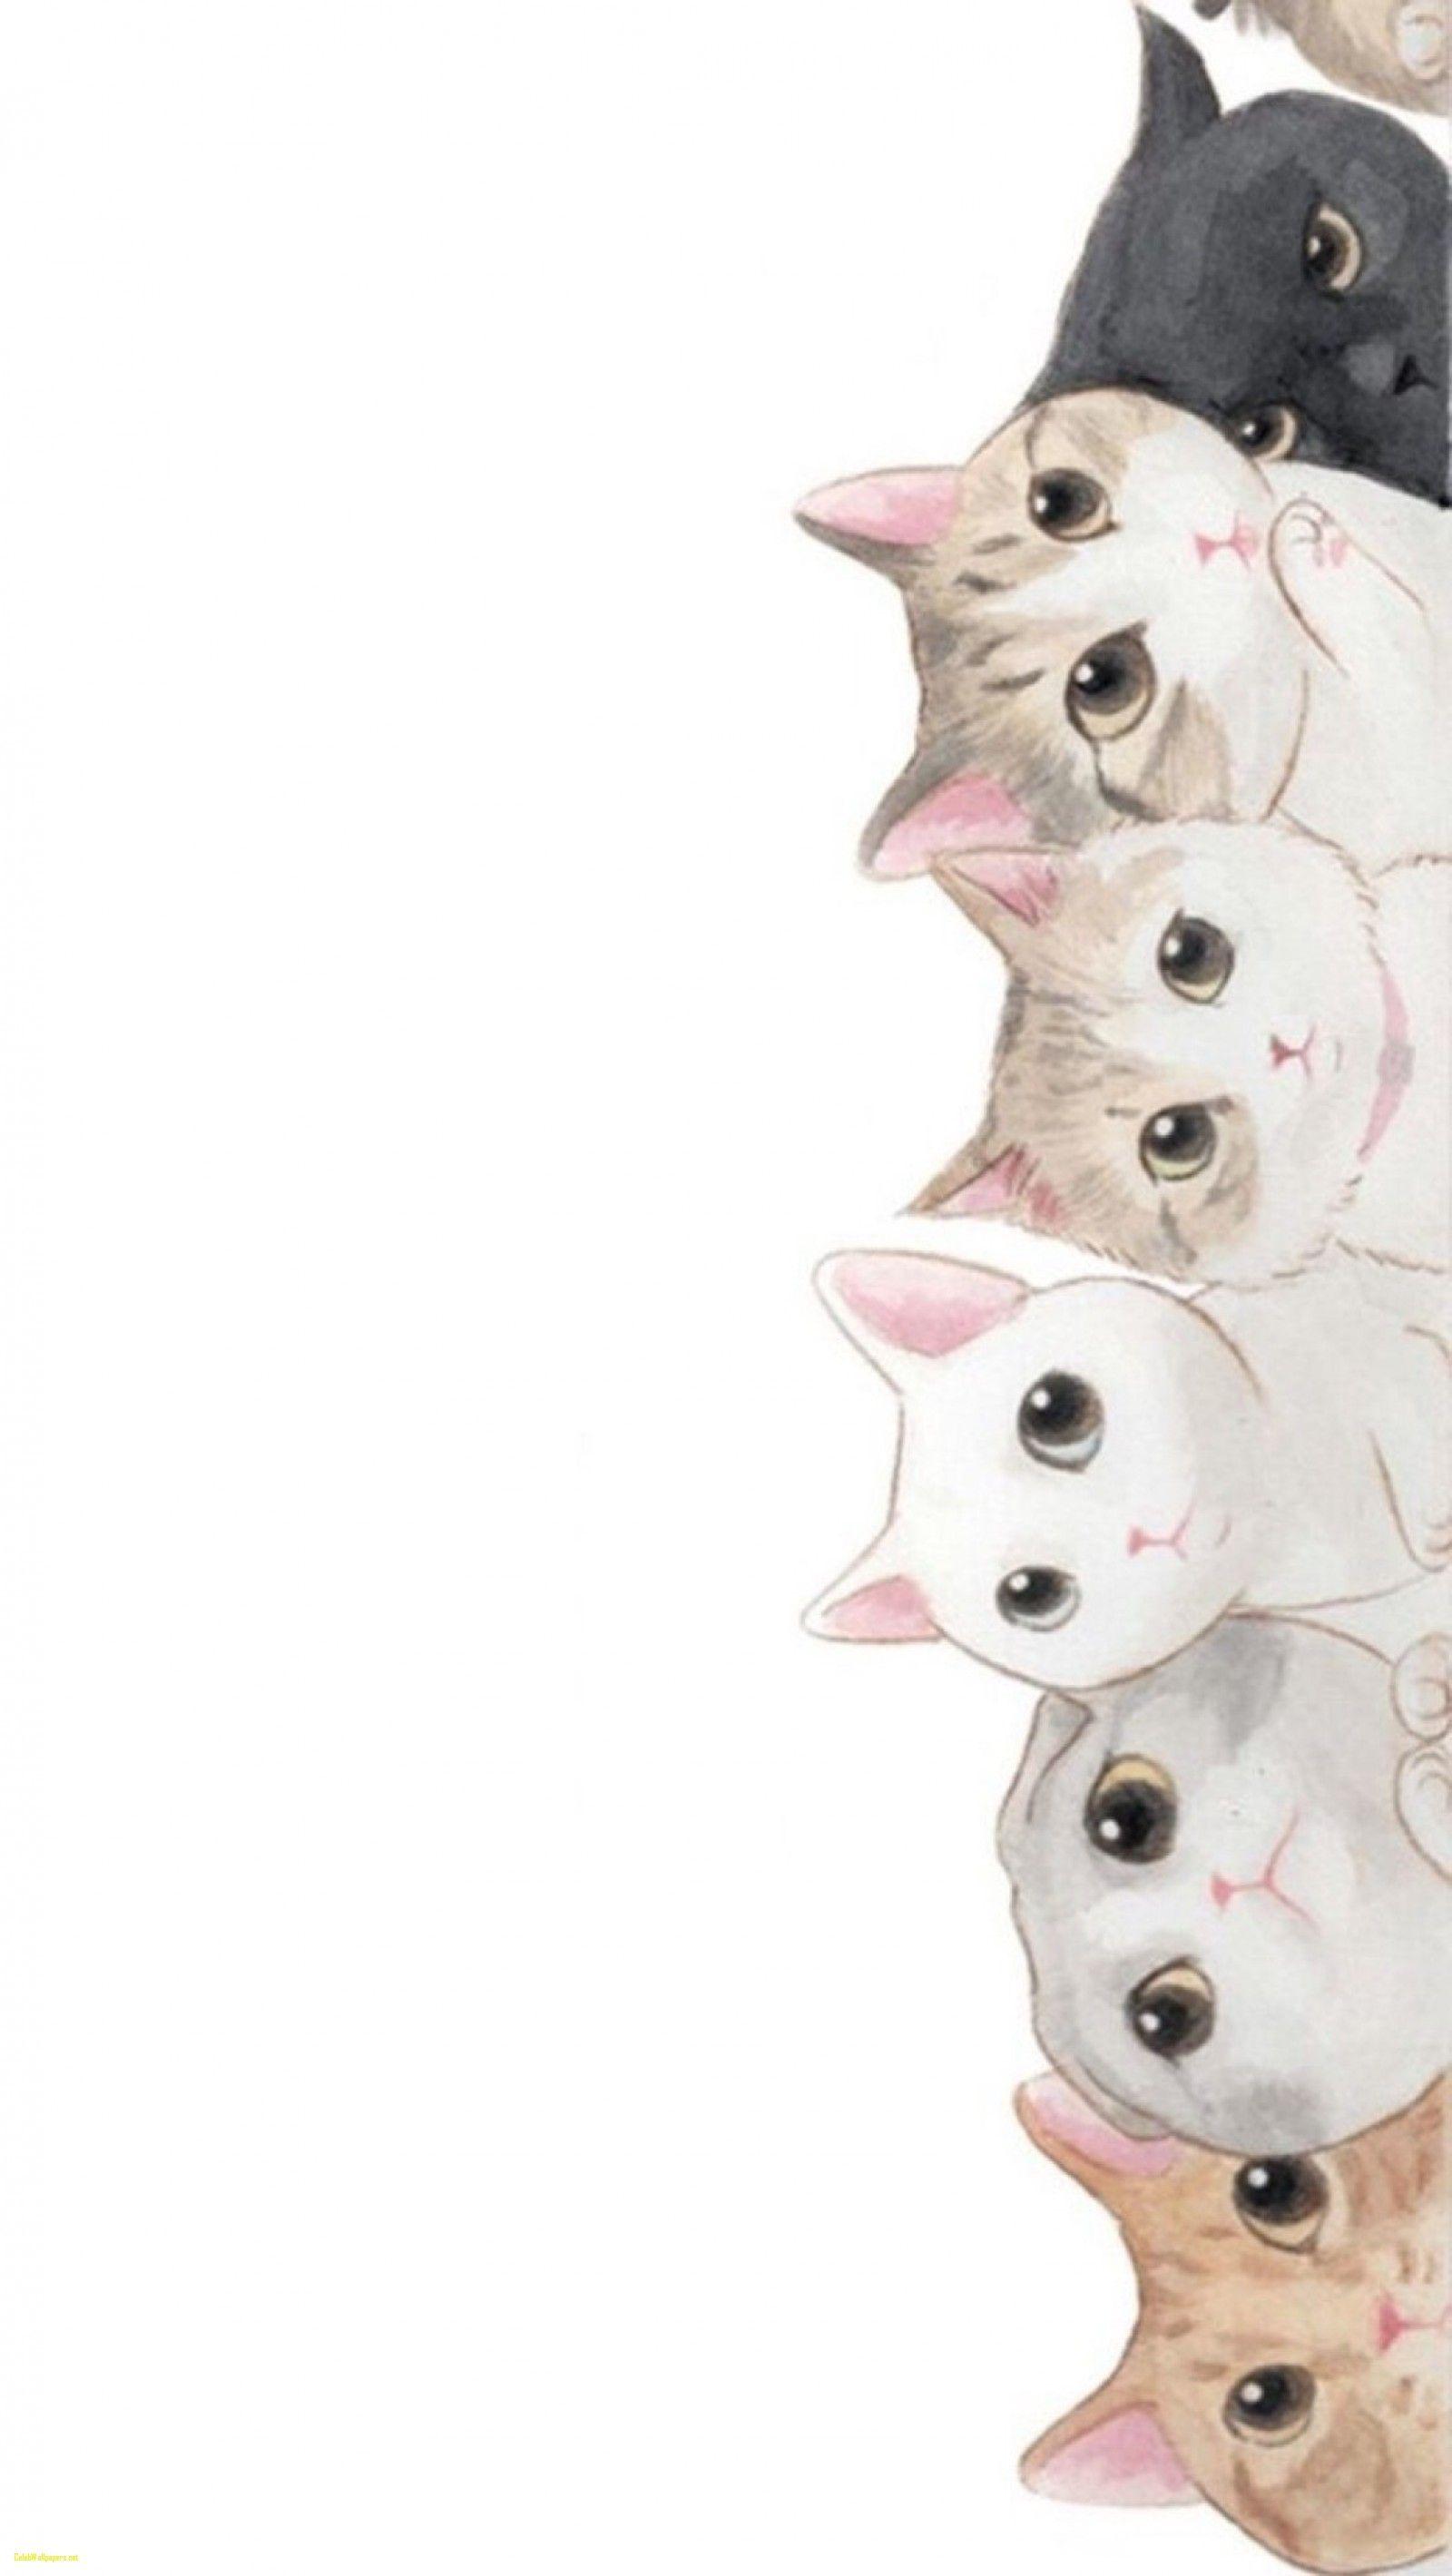  Cute  Iphone Wallpapers  Tumblr  Wallpaper  Cave